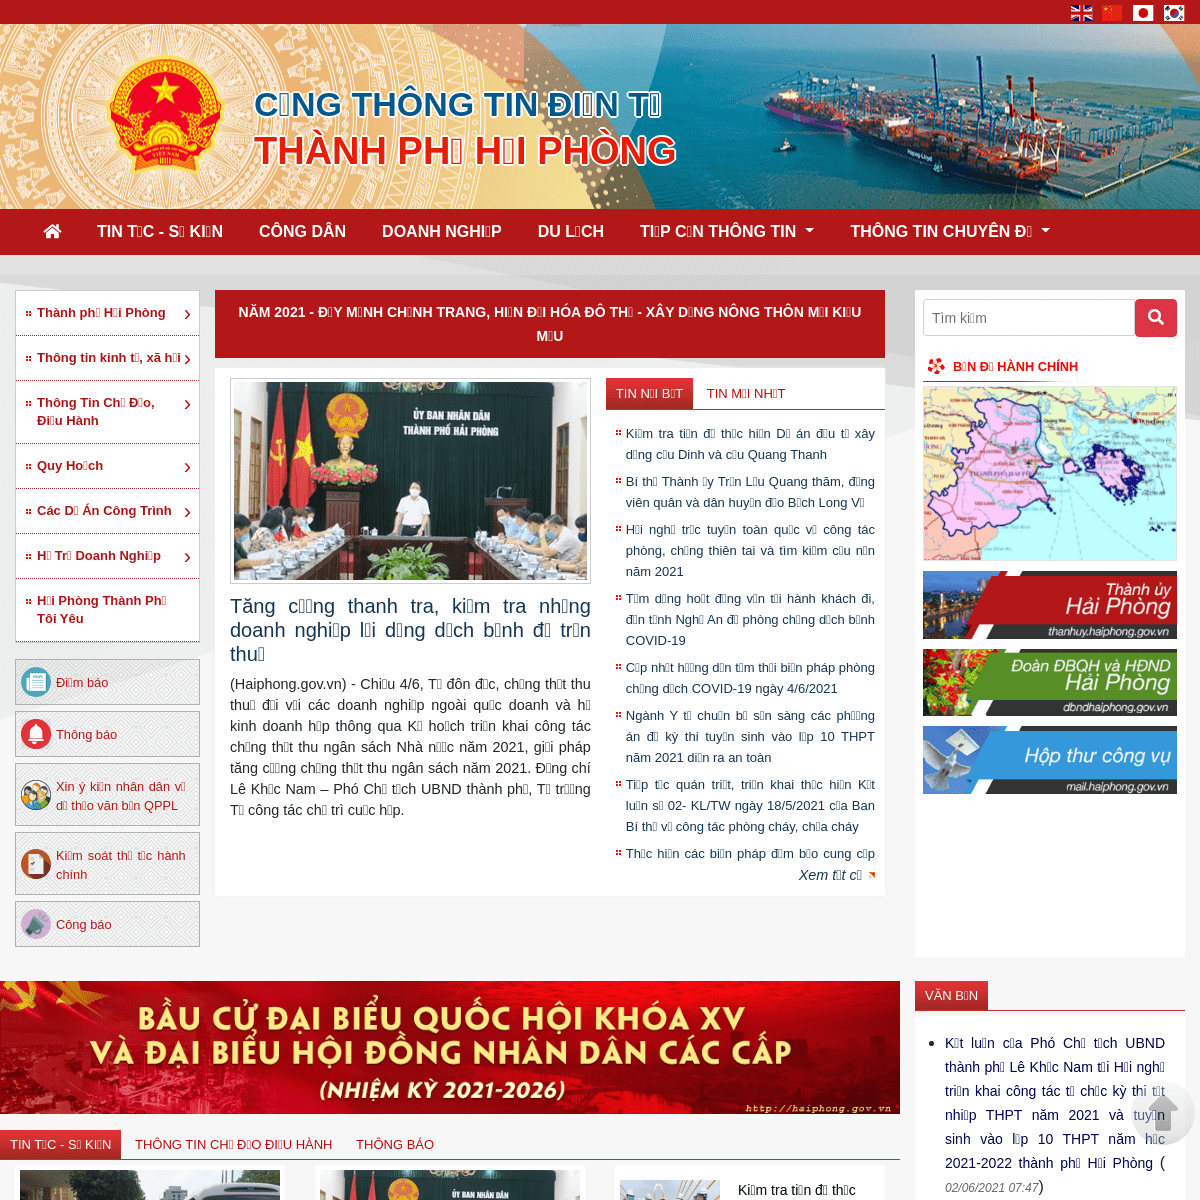 A complete backup of https://haiphong.gov.vn